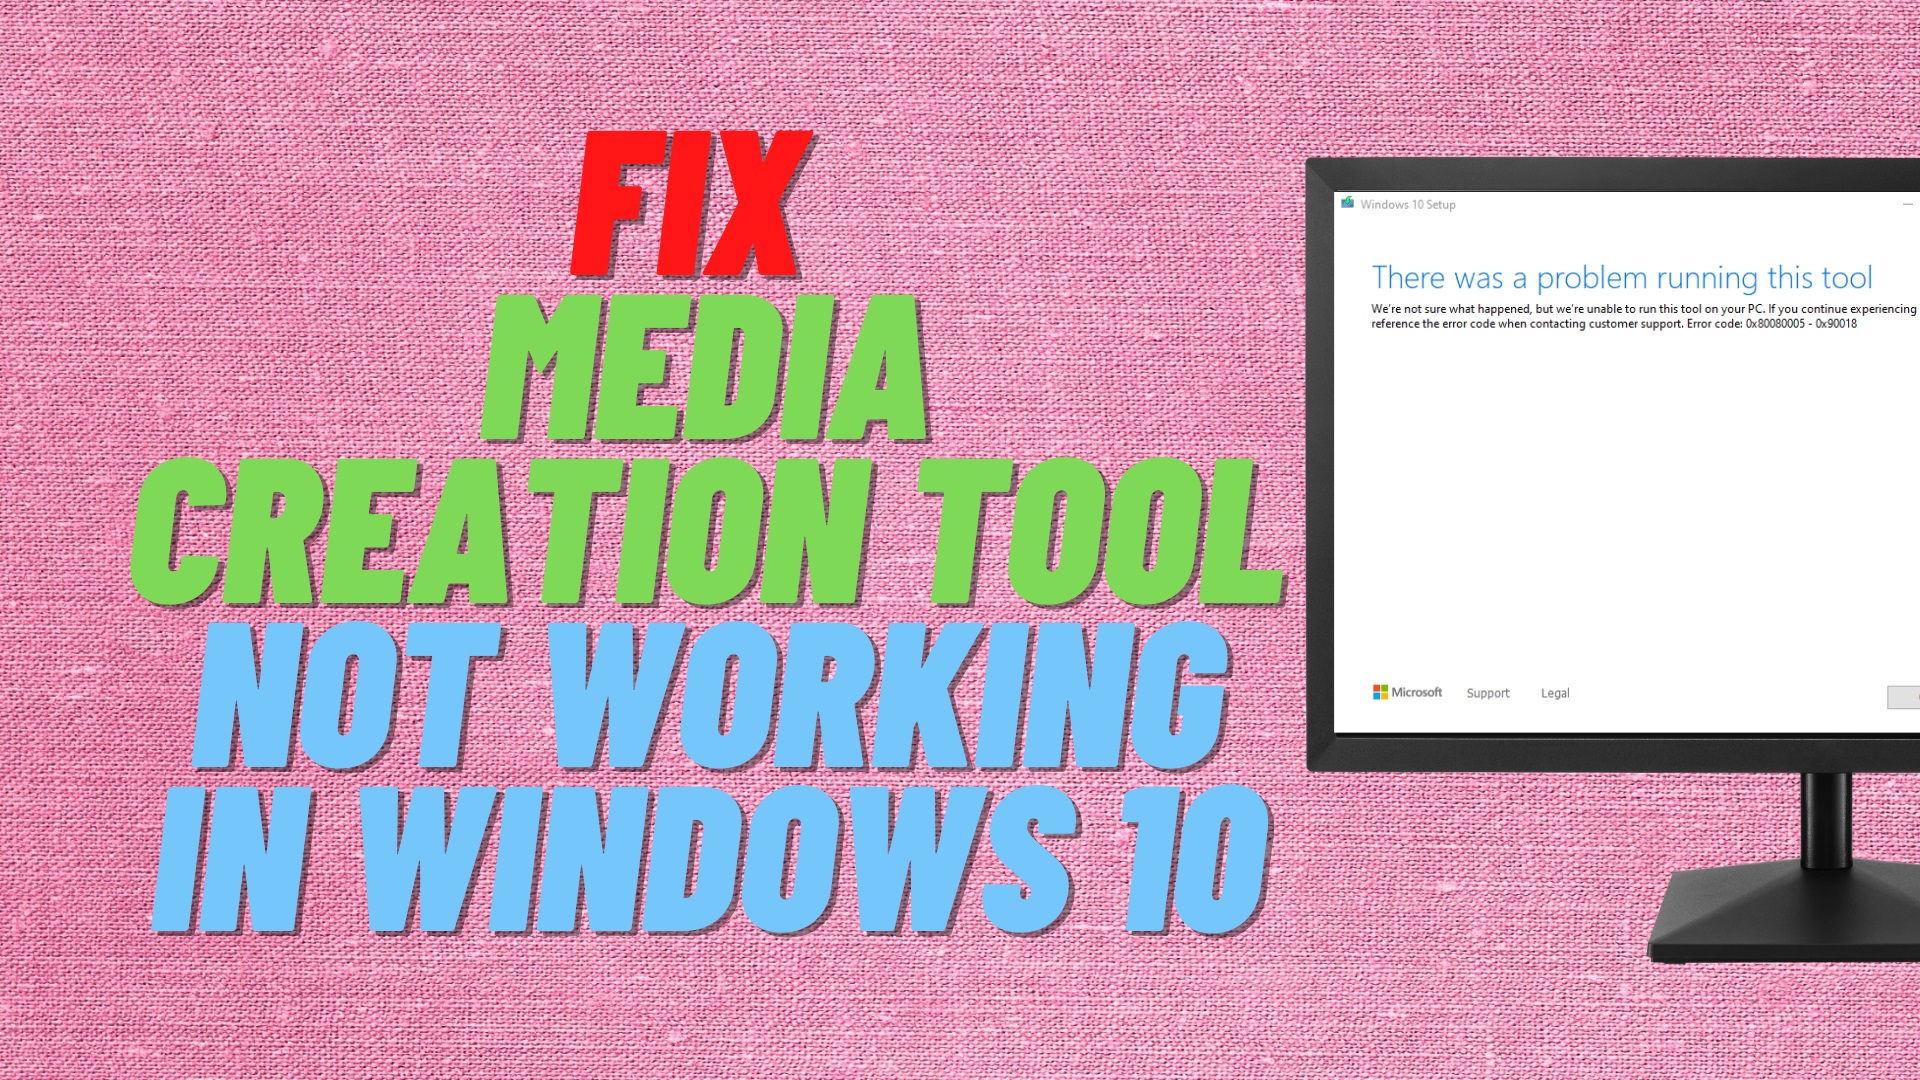 windows 10 media creation tool not showing pro